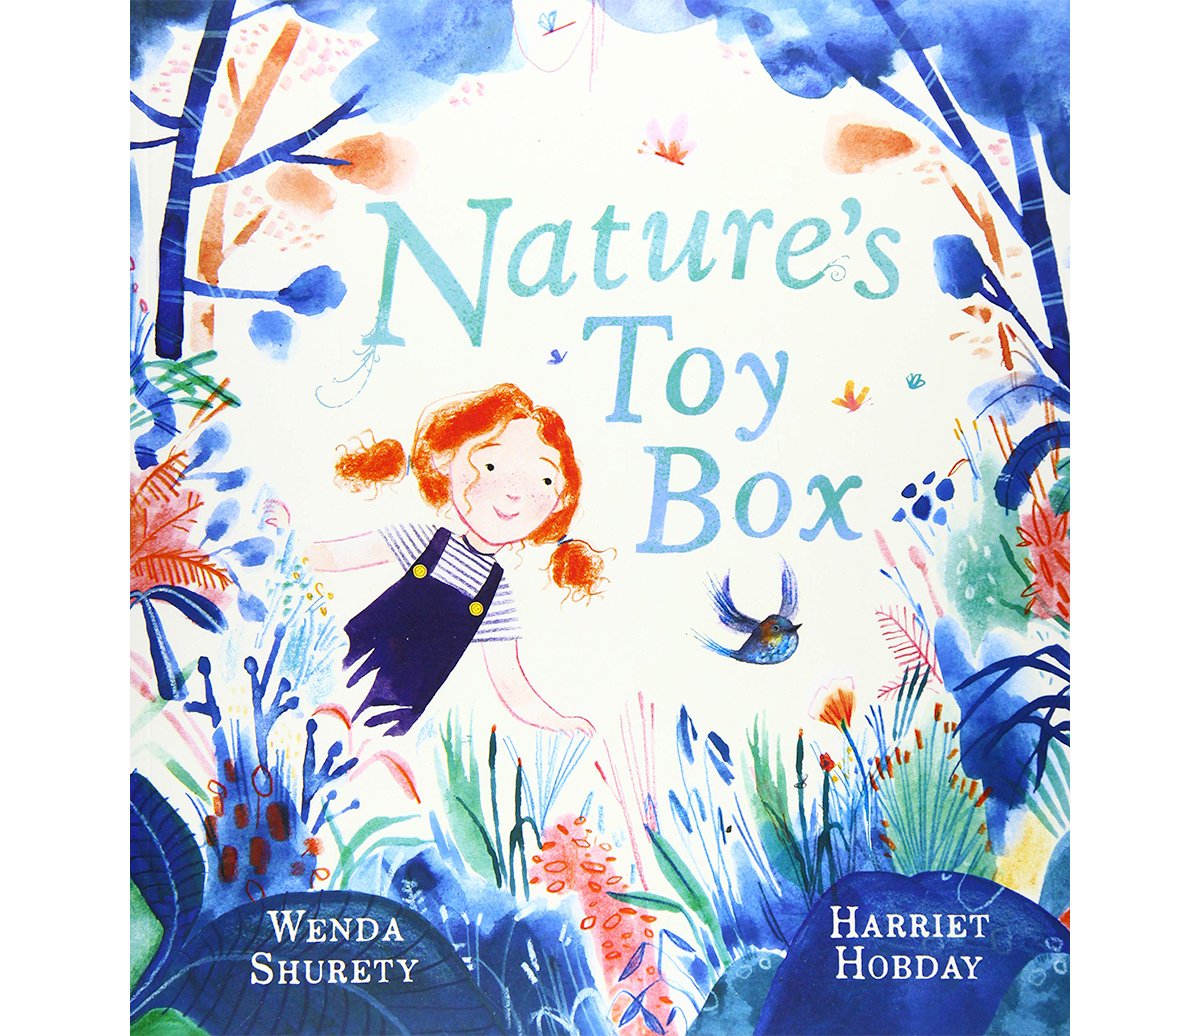 harriet-hobday-natures-toy-box.jpg